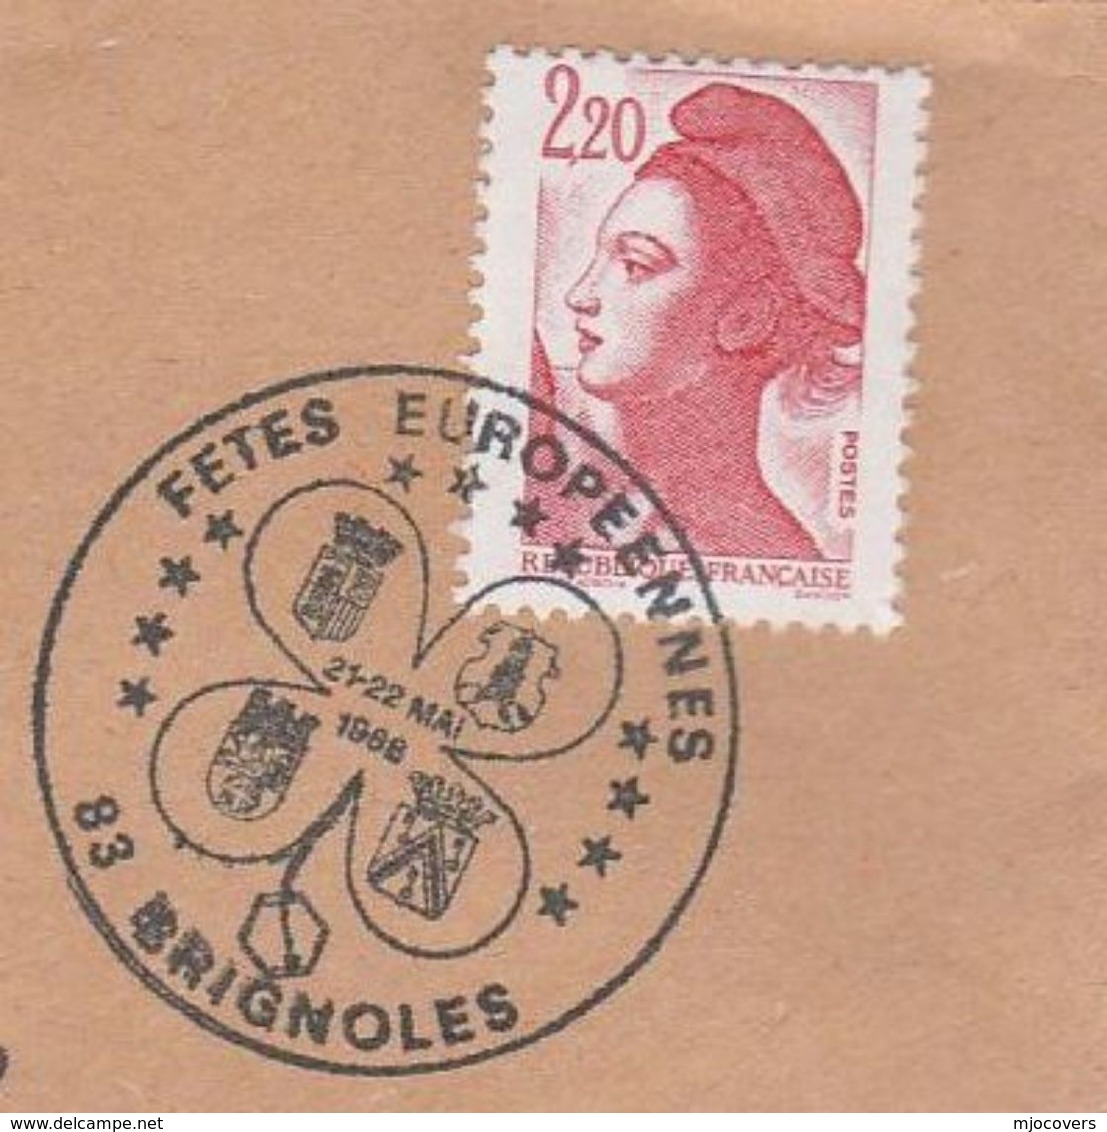 1988 COVER BRIGNOLES EUROPEAN FETE France Stamps Heraldic Pmk - Covers & Documents